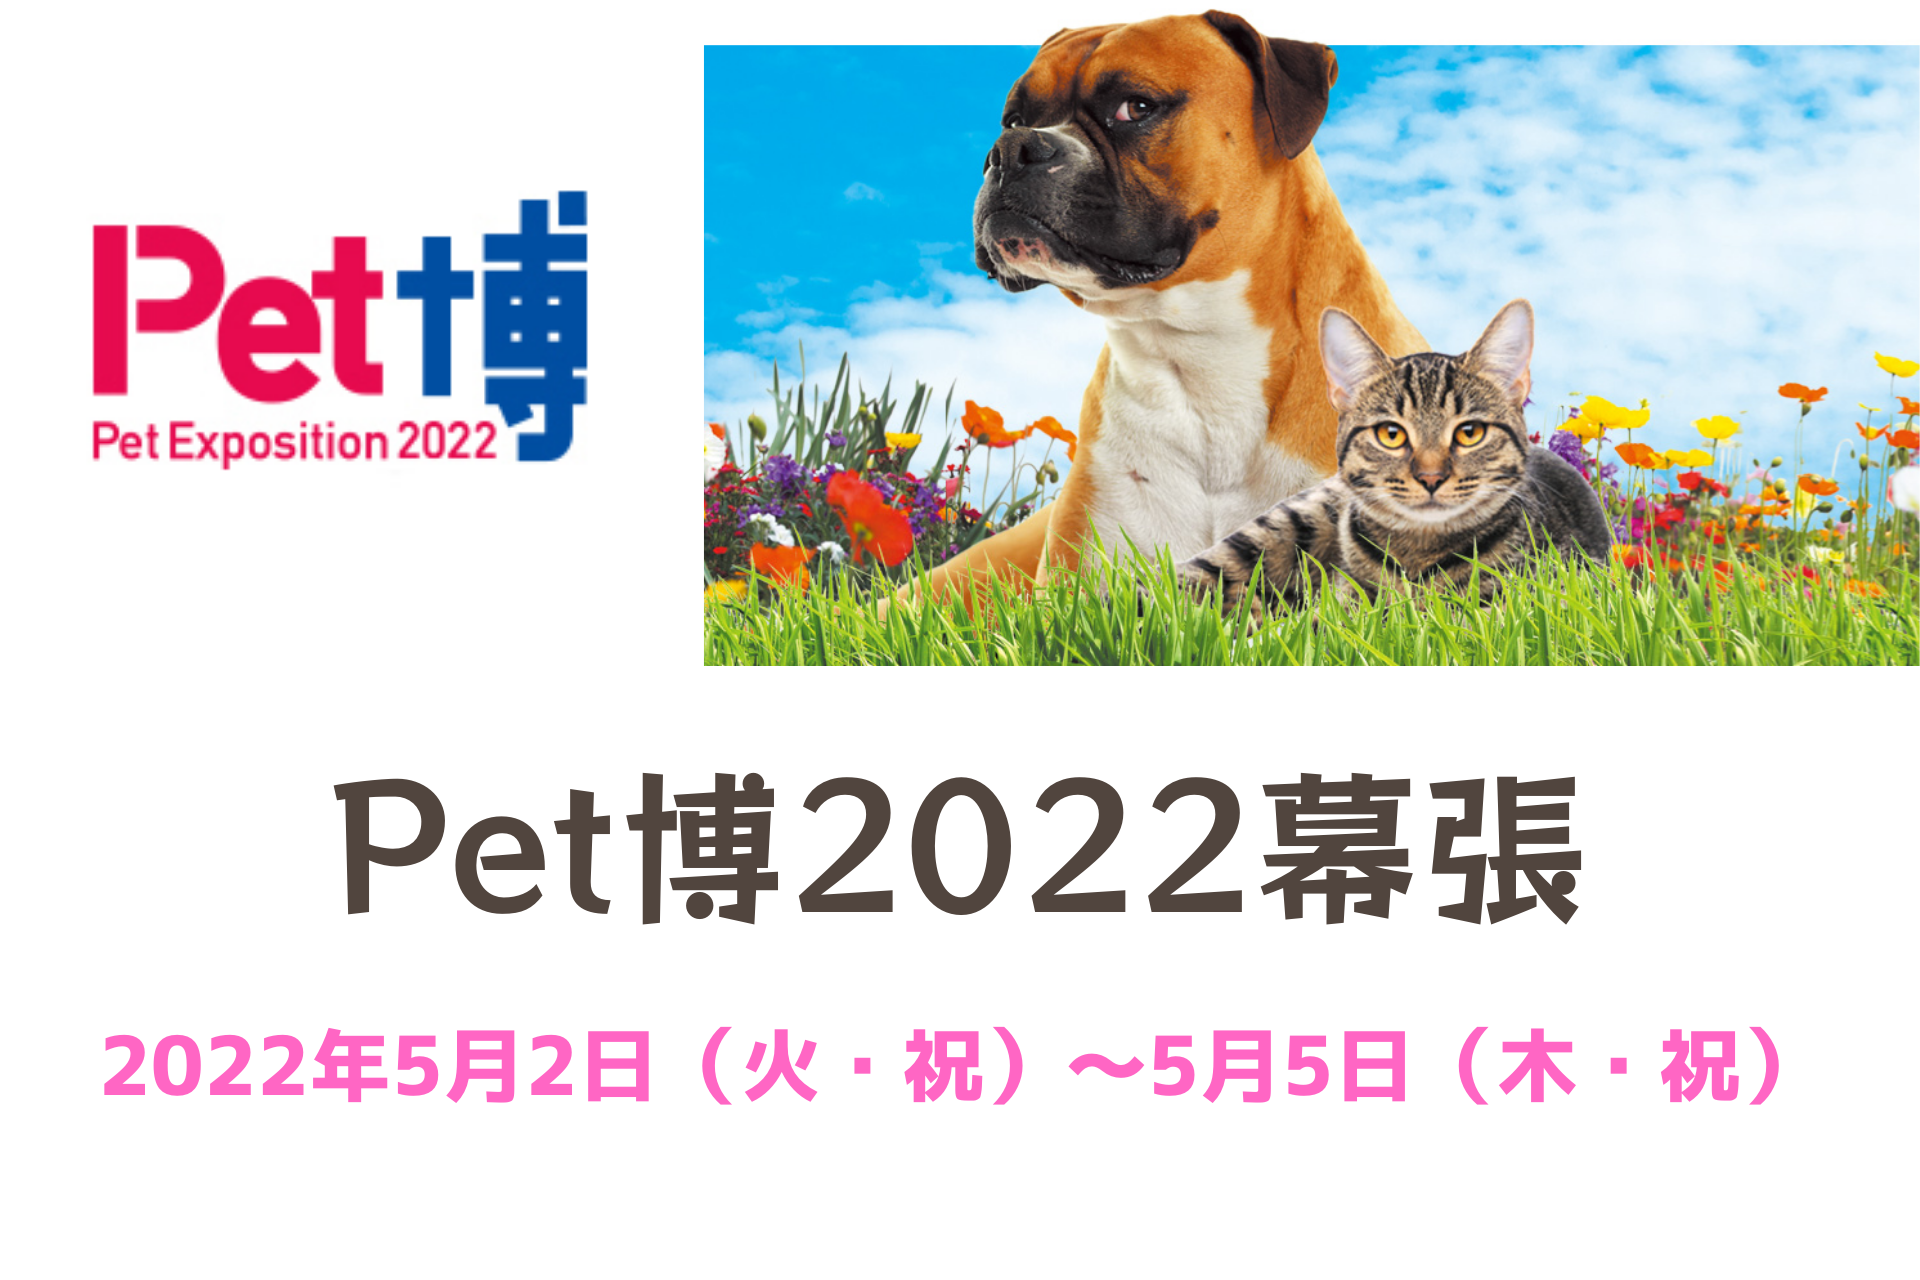 pet博2022幕張、ペット博2022幕張、犬連れて、ペット可能、ペット同伴可能なイベント、関東、神奈川県横浜市、猫と行ける、犬と行ける、